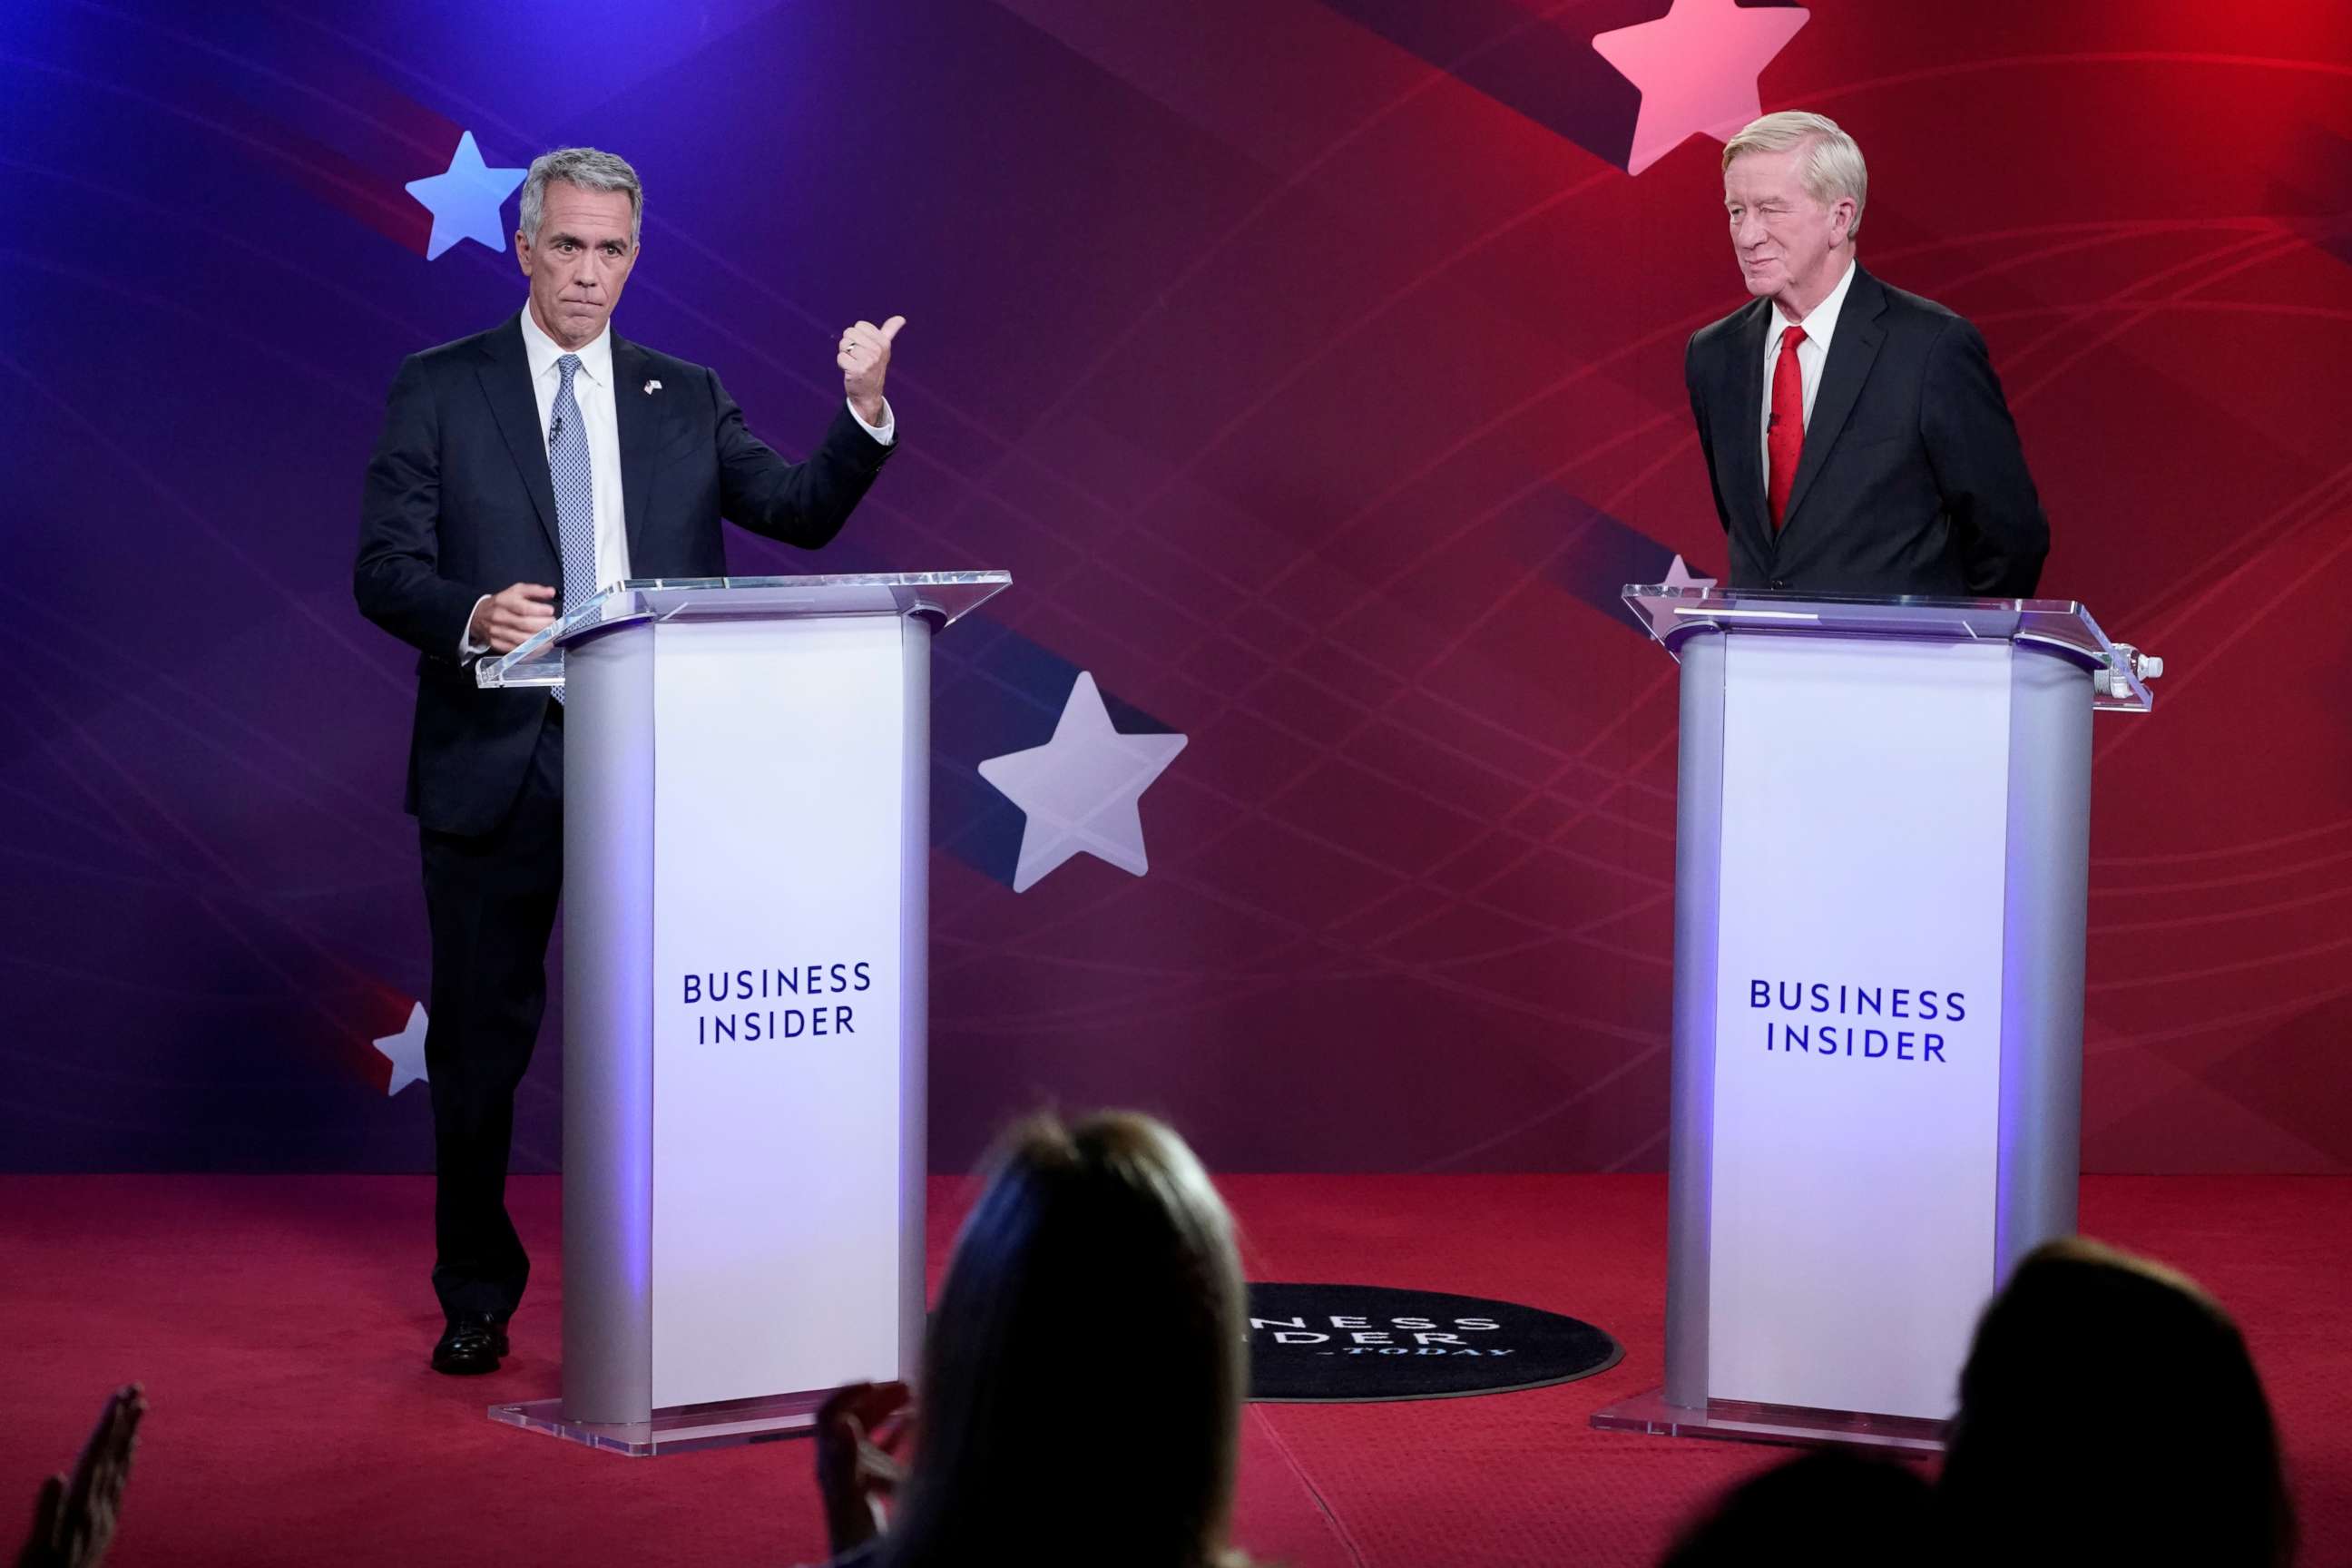 PHOTO: 2020 Republican U.S. presidential candidates, former U.S. congressman Joe Walsh (L) and former Massachusetts Governor Bill Weld begin their debate in New York, U.S. September 24, 2019.  REUTERS/Mark Kauzlarich